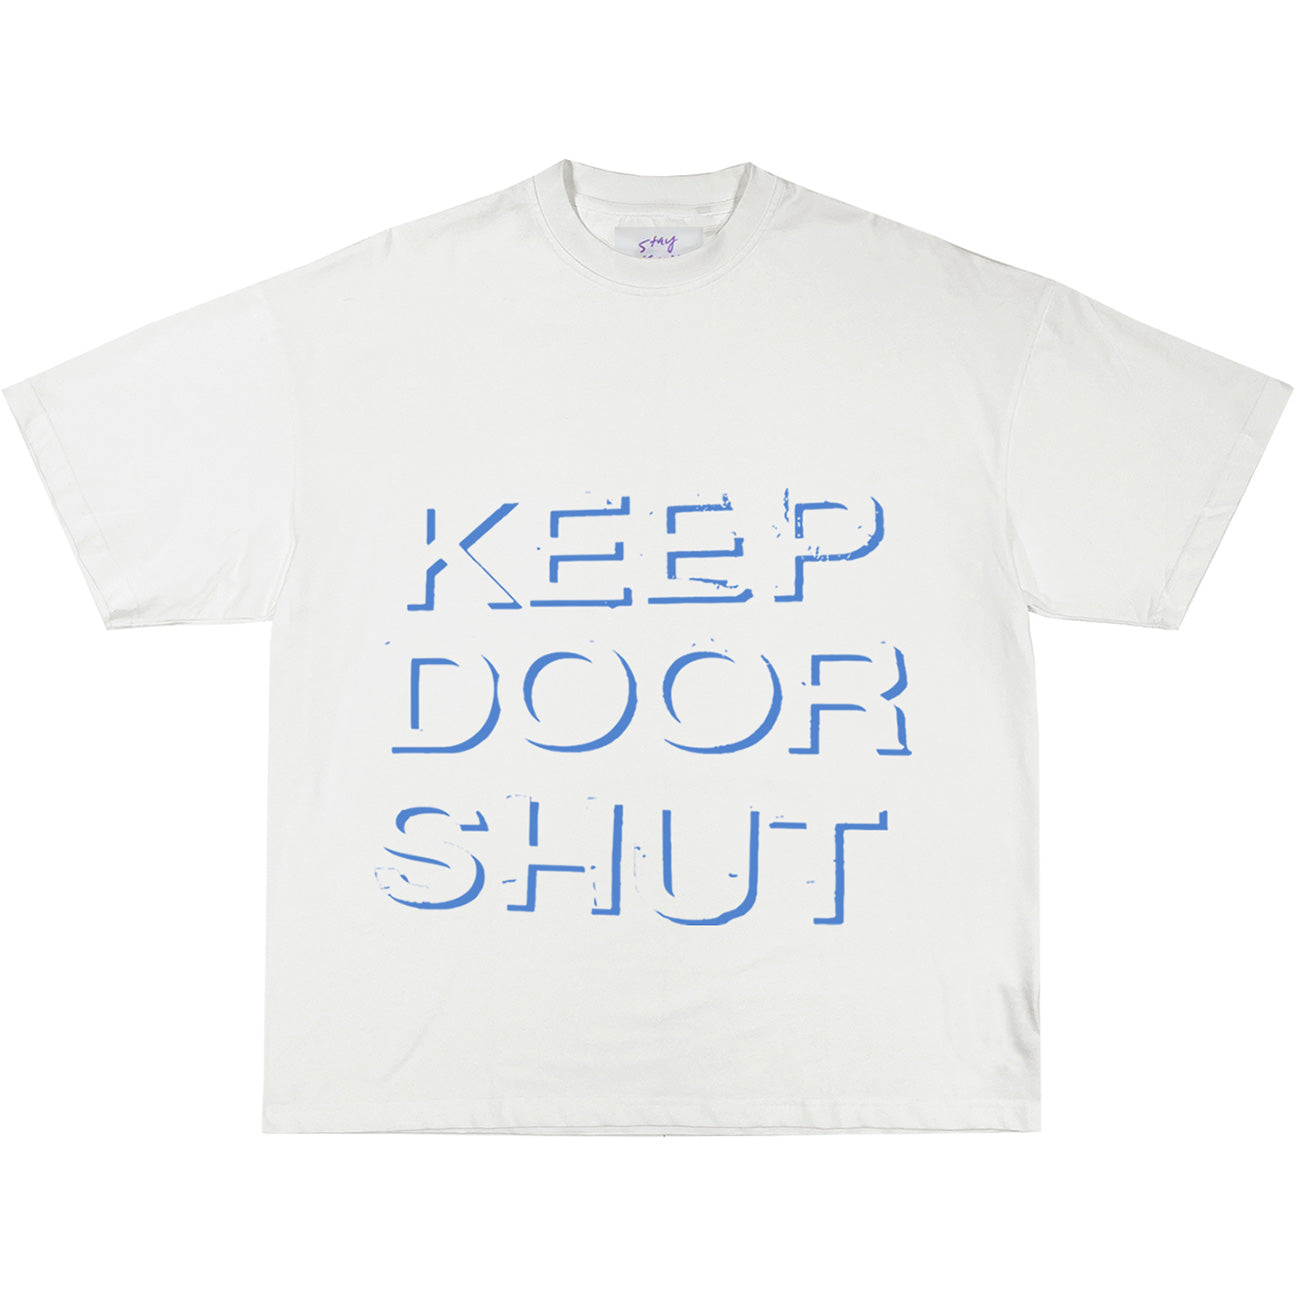 Keep Door Shut Heavy T-Shirt (Off White)